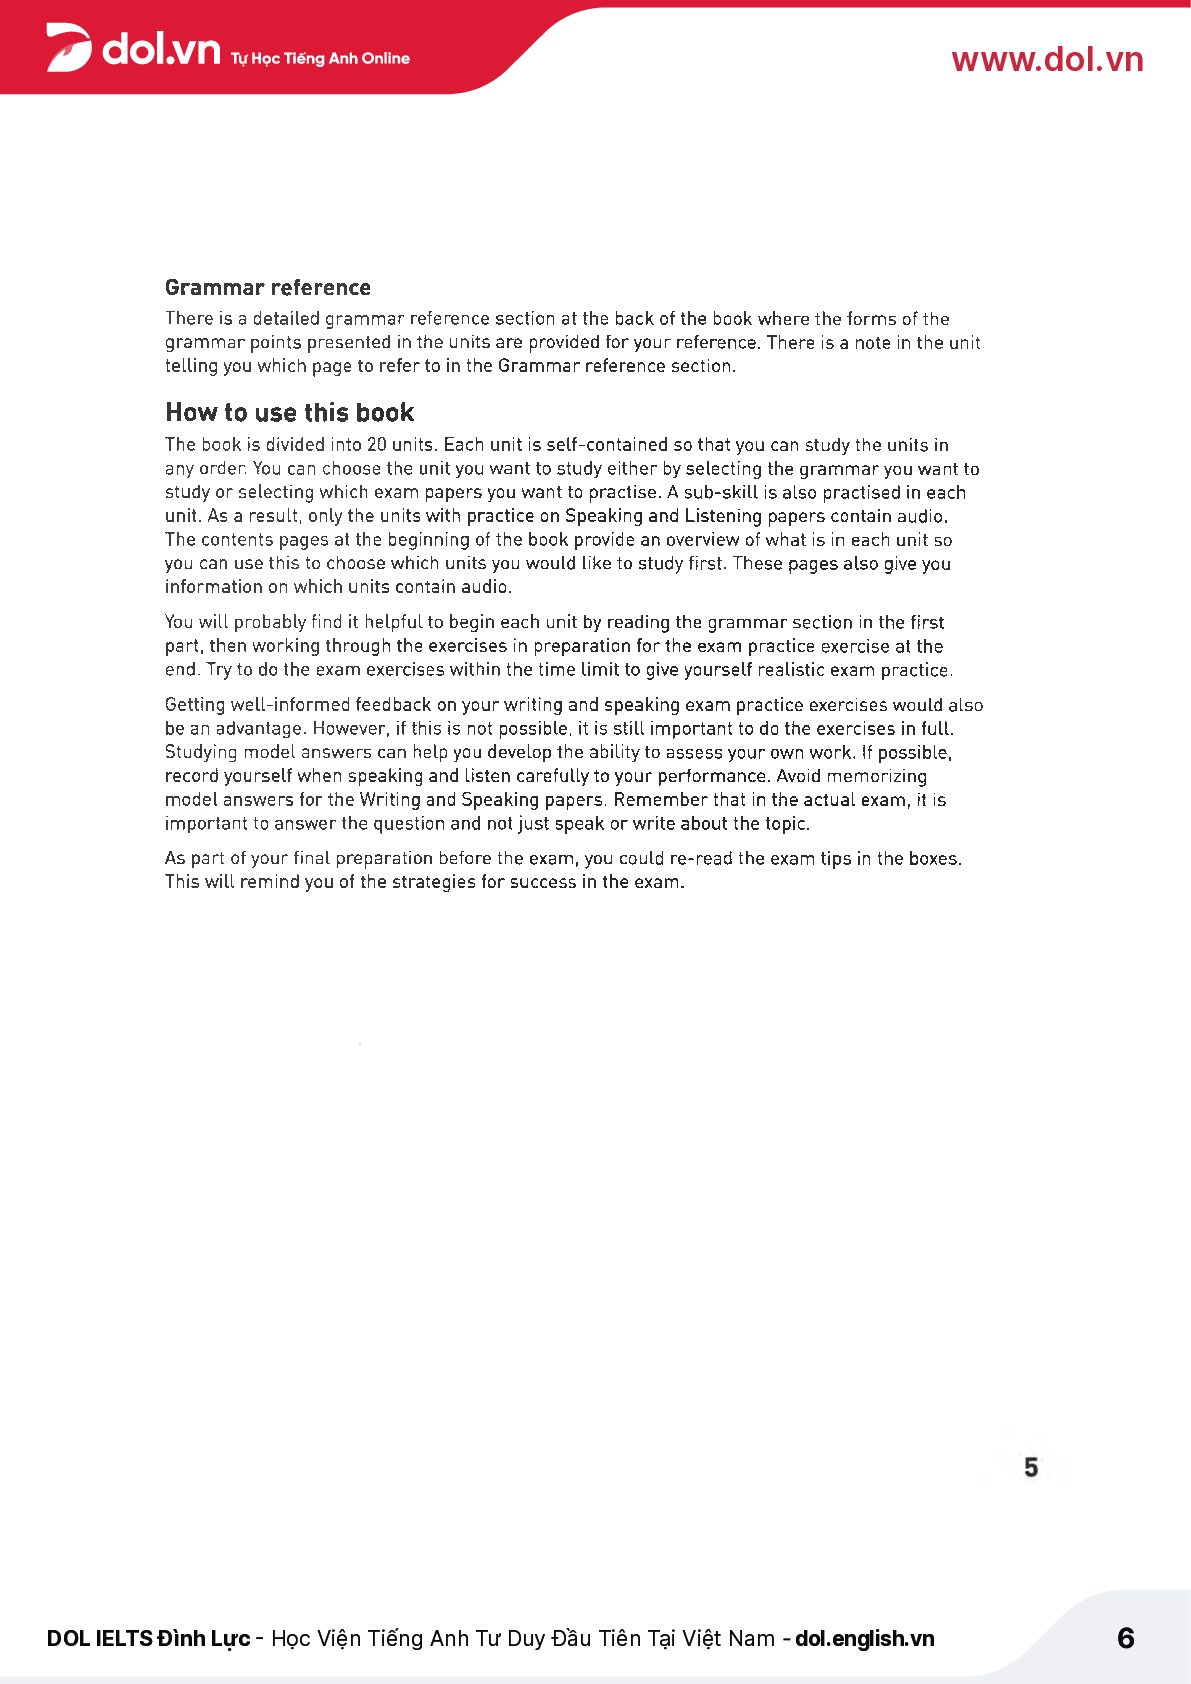 Sách Collins Grammar For IELTS pdf | Xem online, tải PDF miễn phí (trang 6)